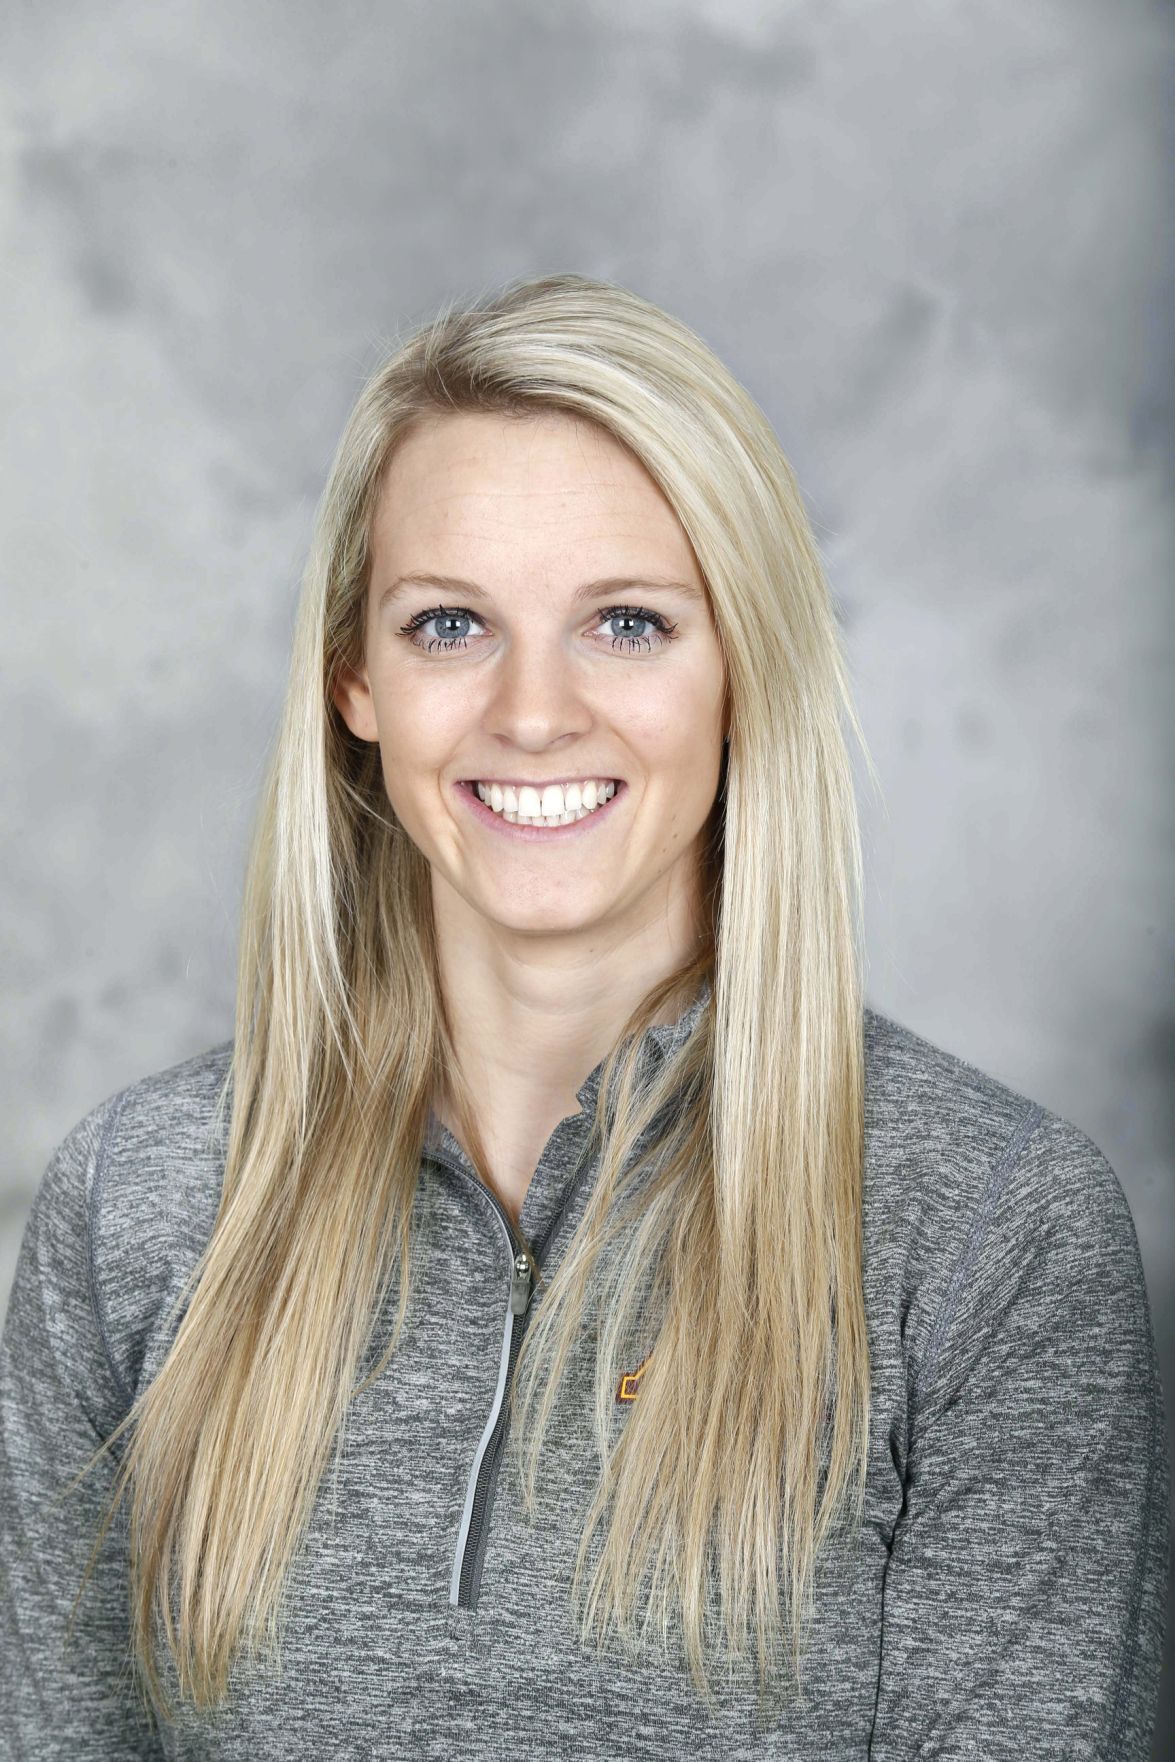 Amanda Kessel - Female American Hockey Player, sister of NHL player Phil Ke...